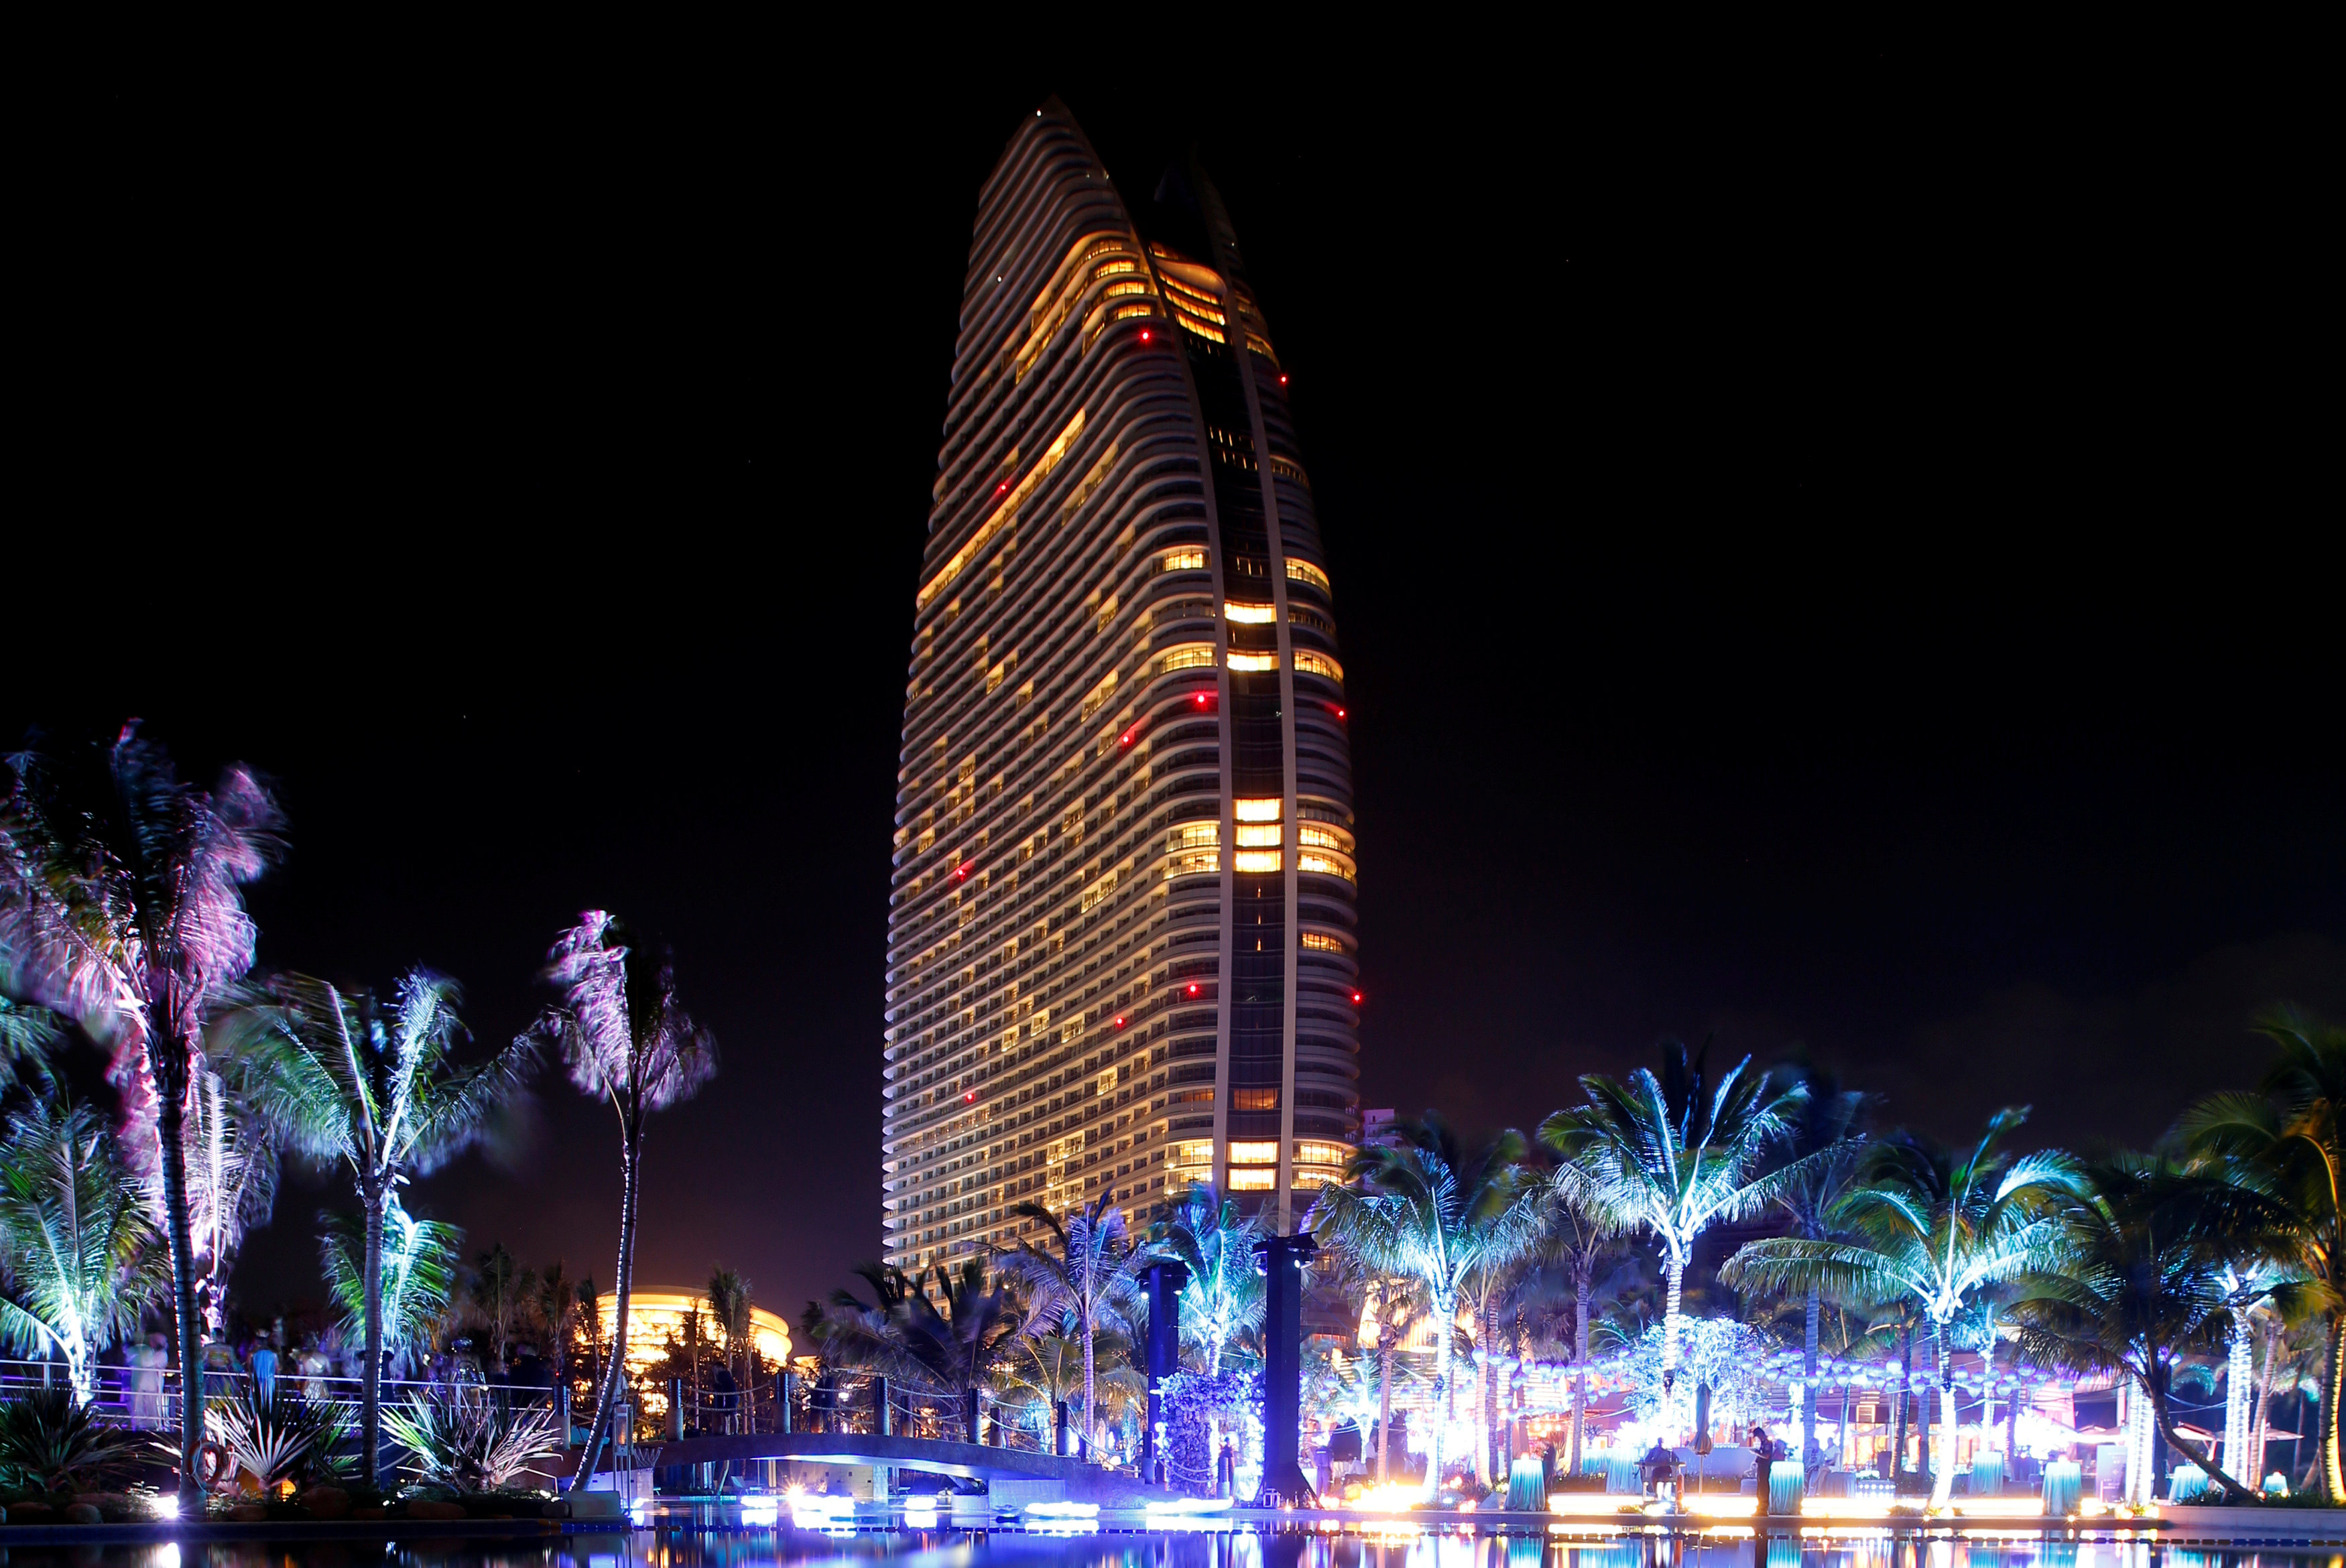 China's Fosun launches $1.74 billion Atlantis Sanya luxury resort